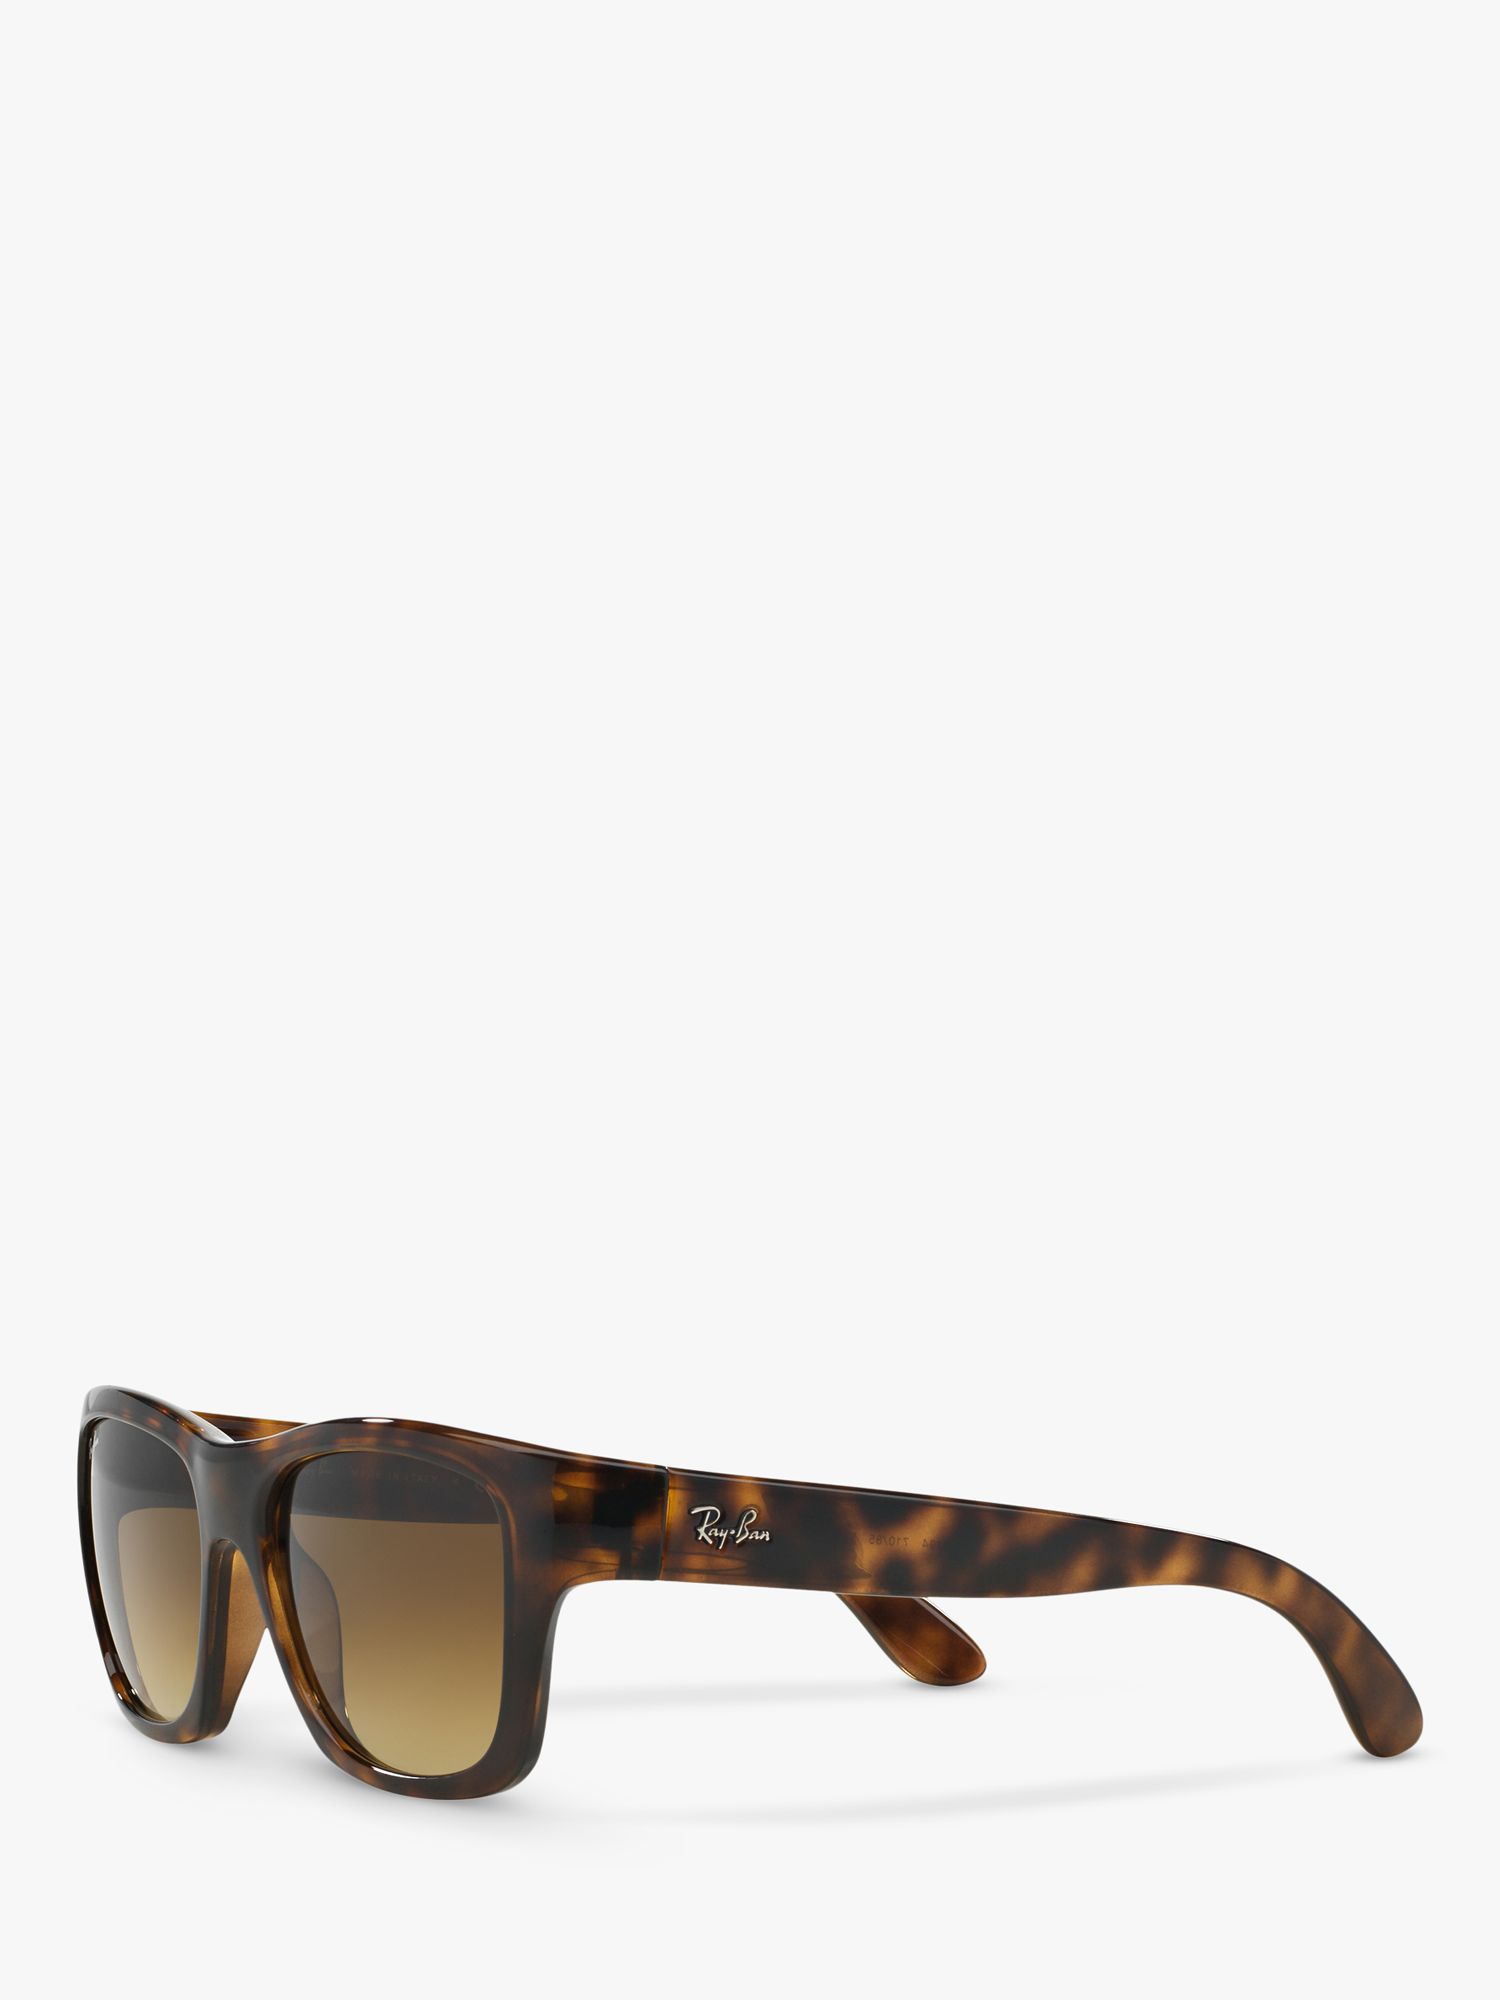 Ray-Ban RB4194 Unisex Square Sunglasses, Havana/Brown Gradient